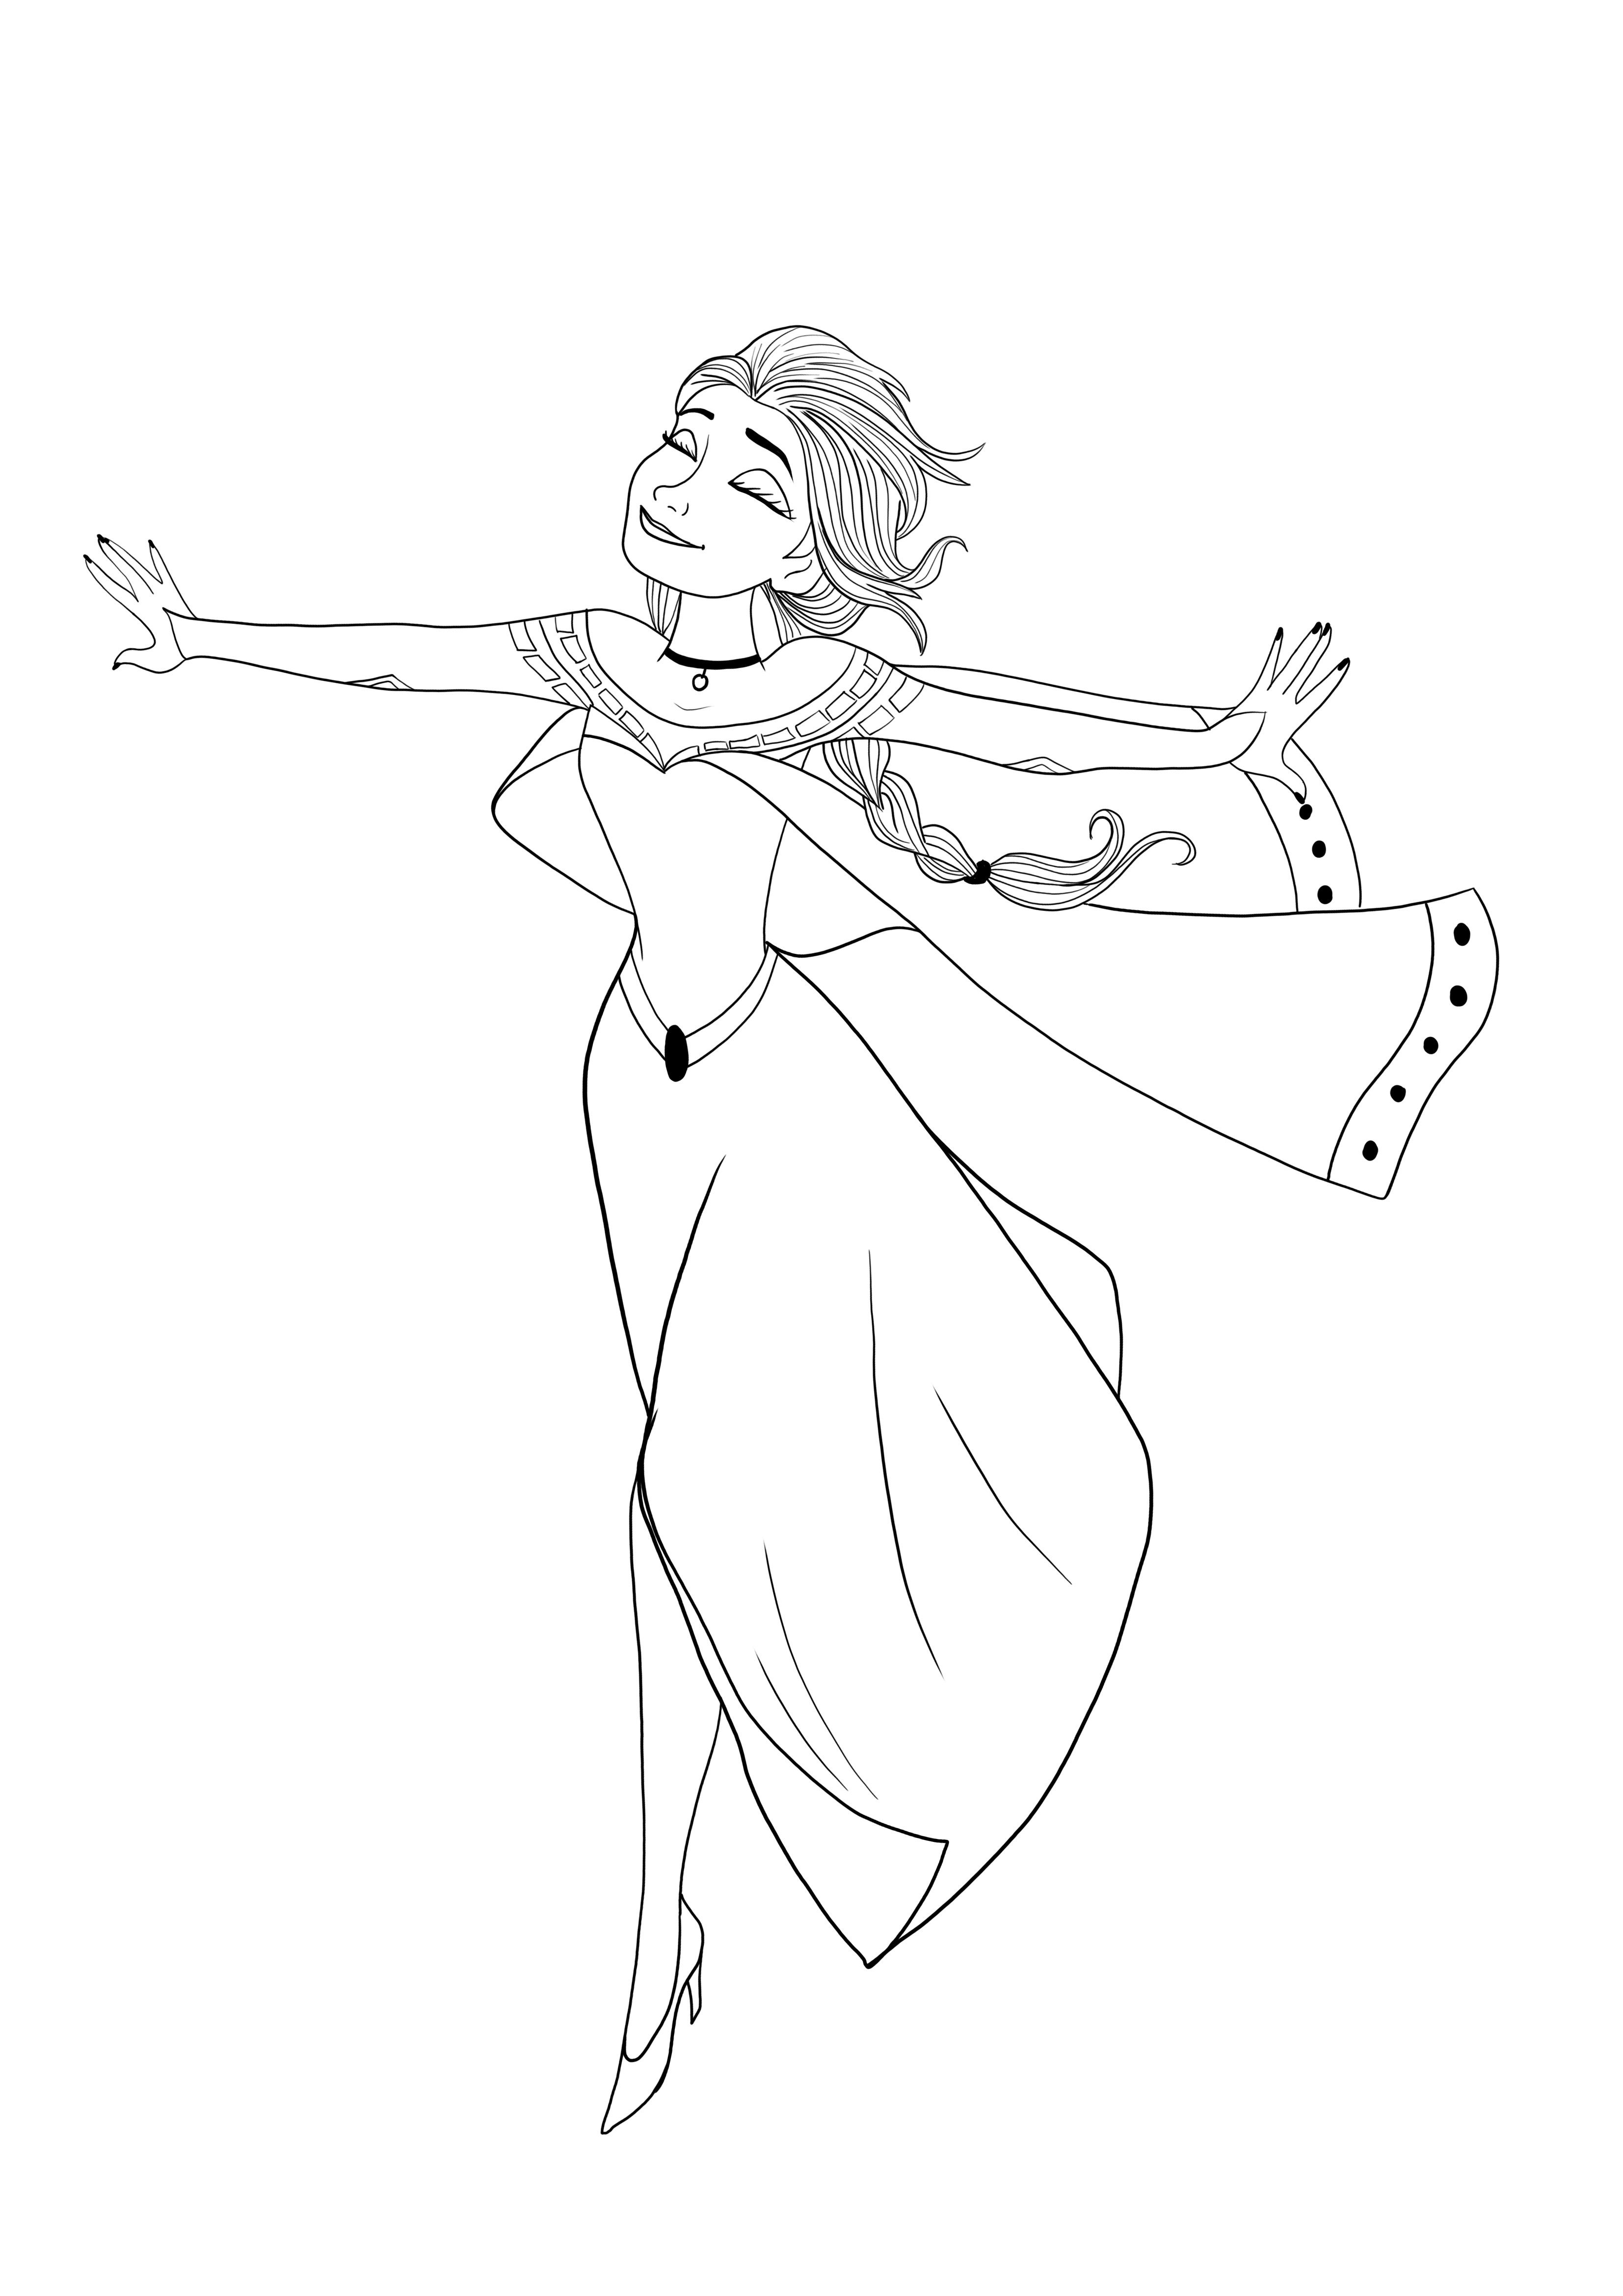 Elsa dancing free coloring and printing page